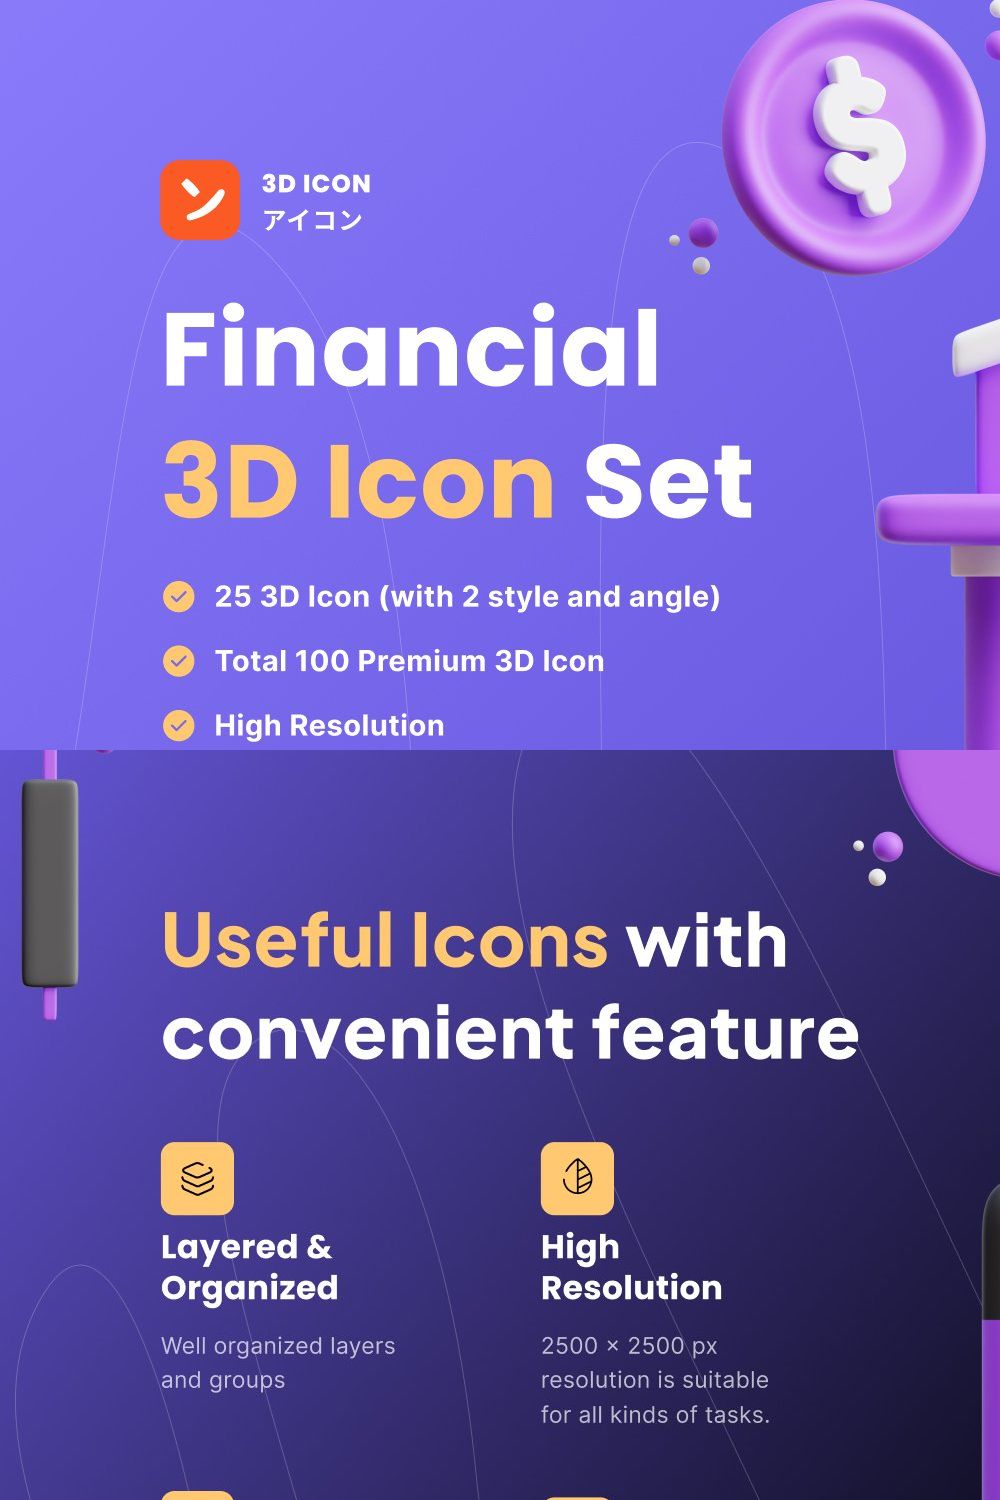 Financial 3D Icon Set pinterest preview image.